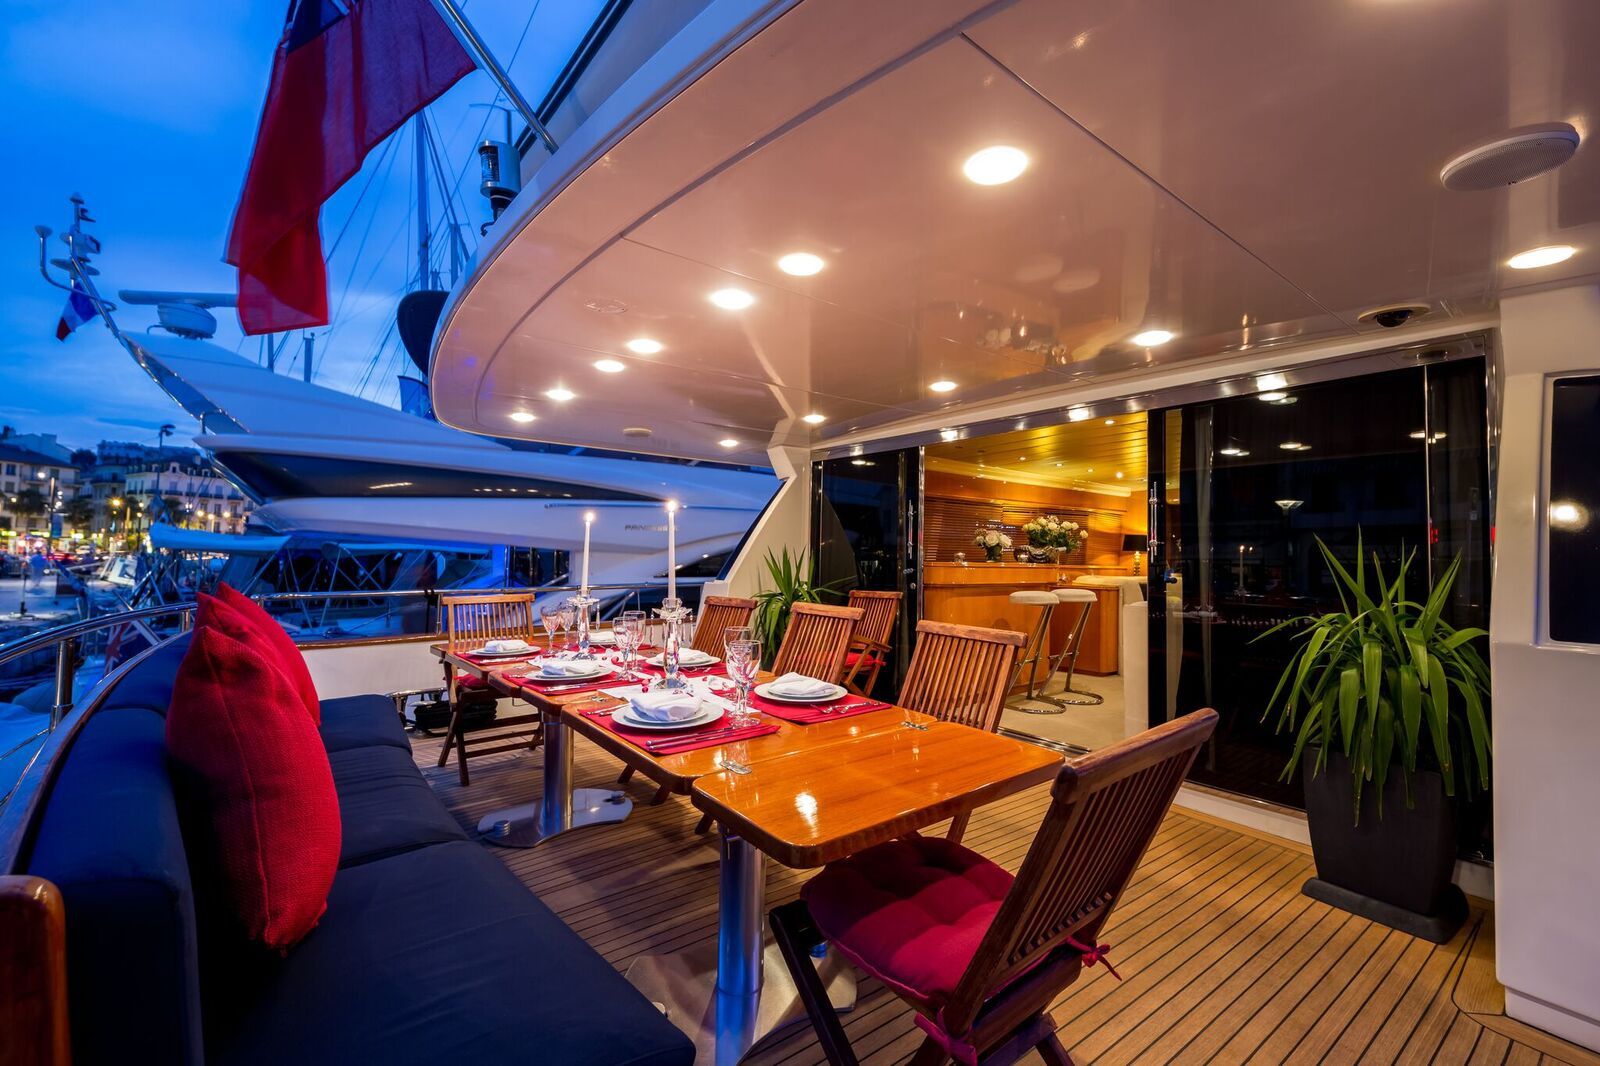 INDULGENCE OF POOLE Mangusta 86 Luxury Superyacht Aft Deck Dining